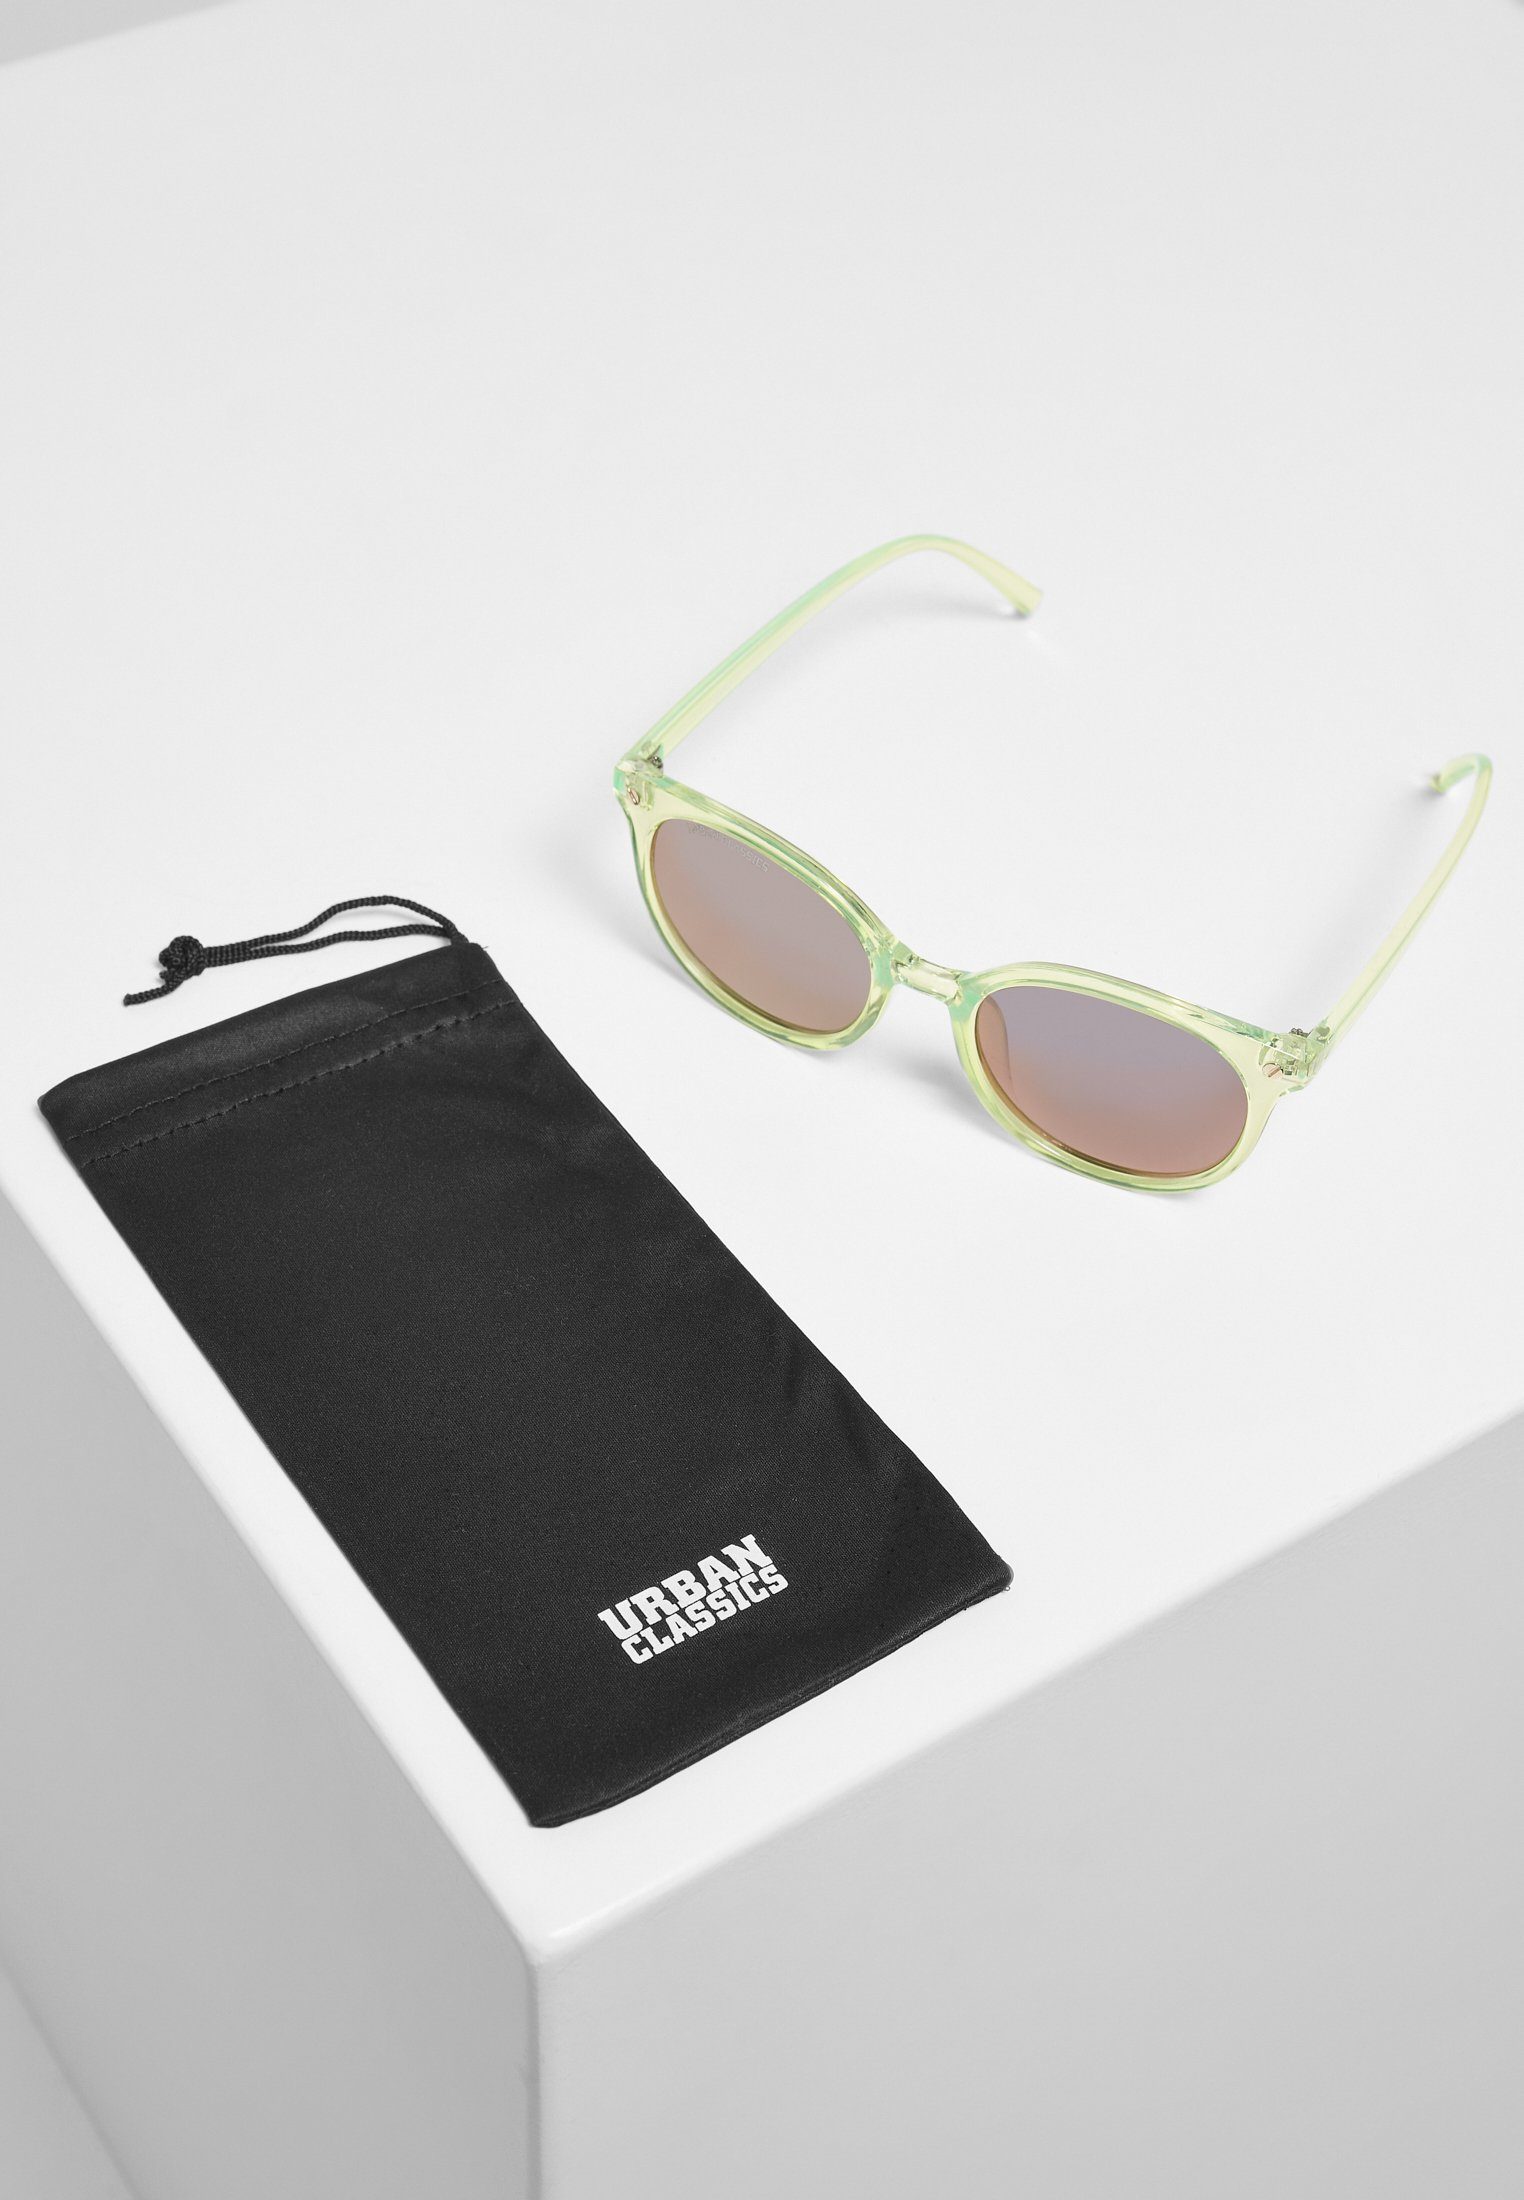 [Japanisches limitiertes Modell] URBAN CLASSICS neonyellow/black Sonnenbrille 108 UC Sunglasses Accessoires